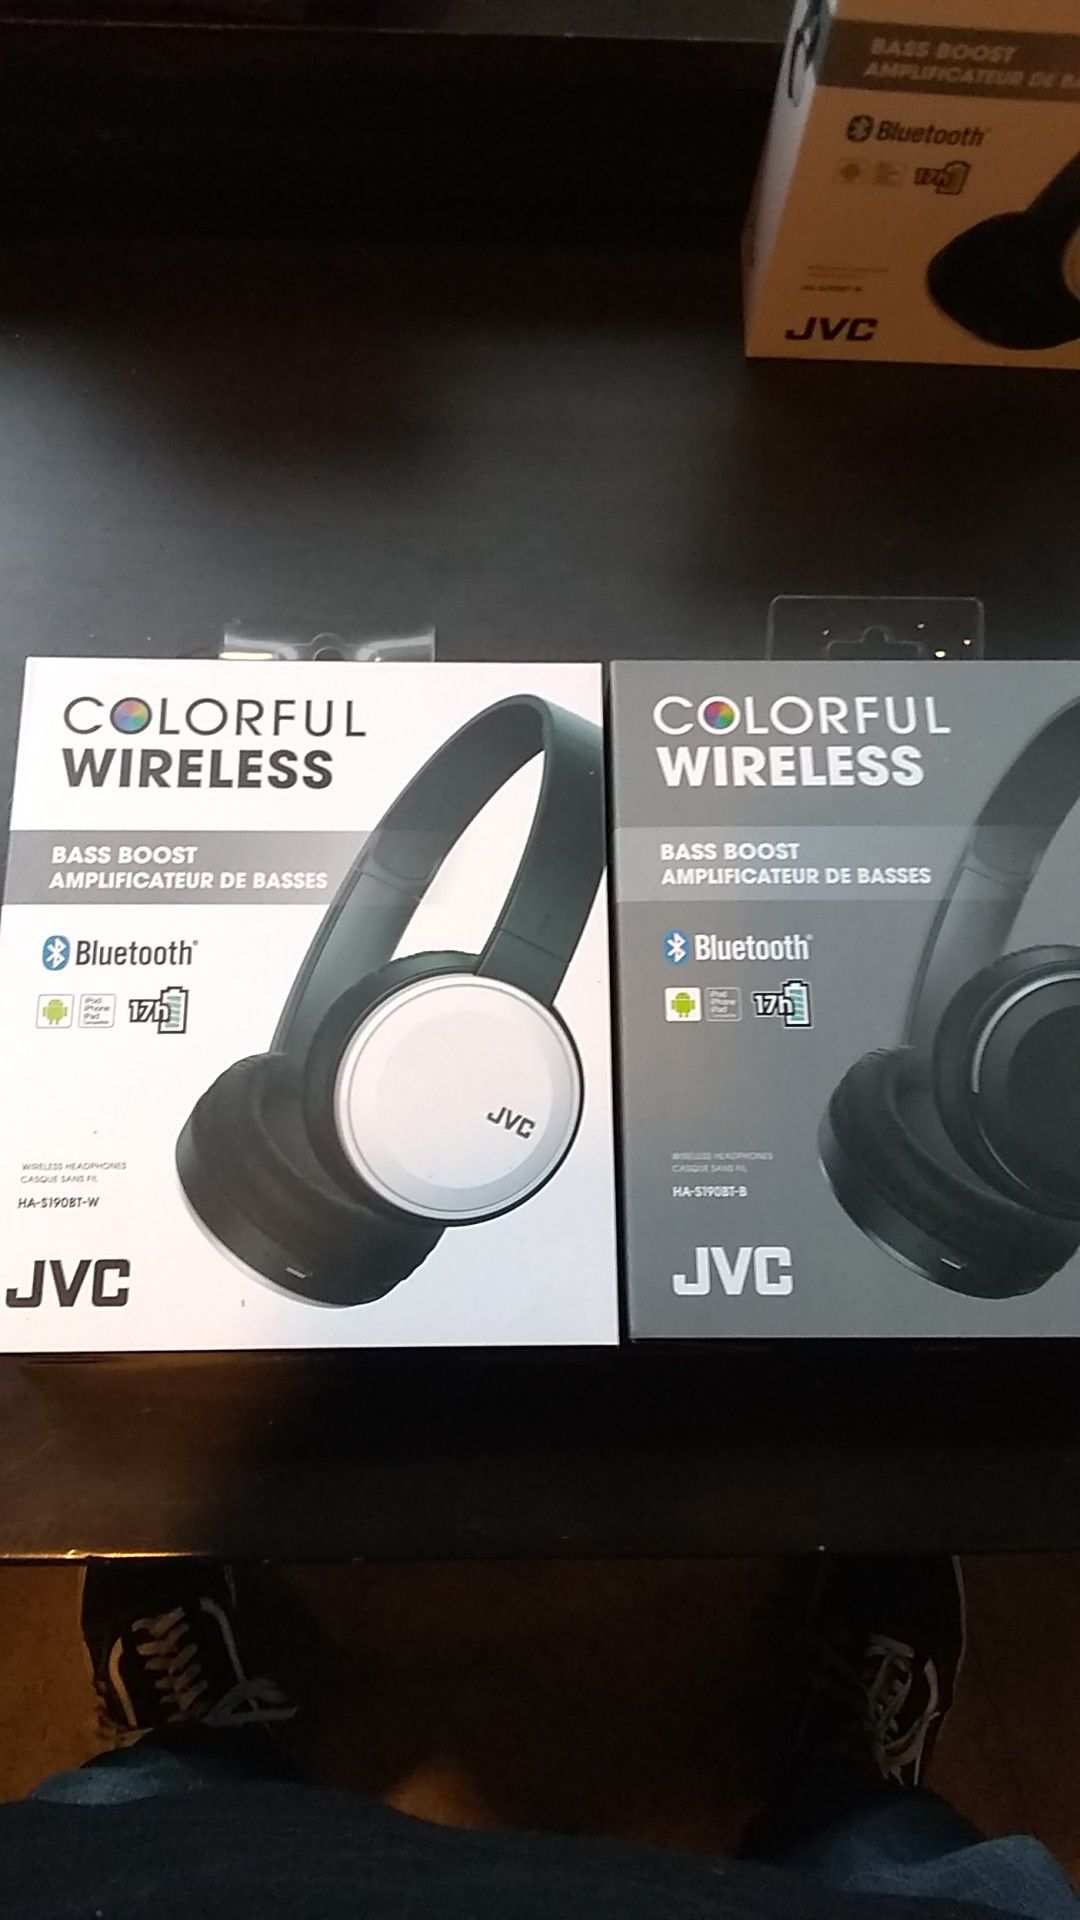 JVC colorful wireless bass boost Bluetooth headphones